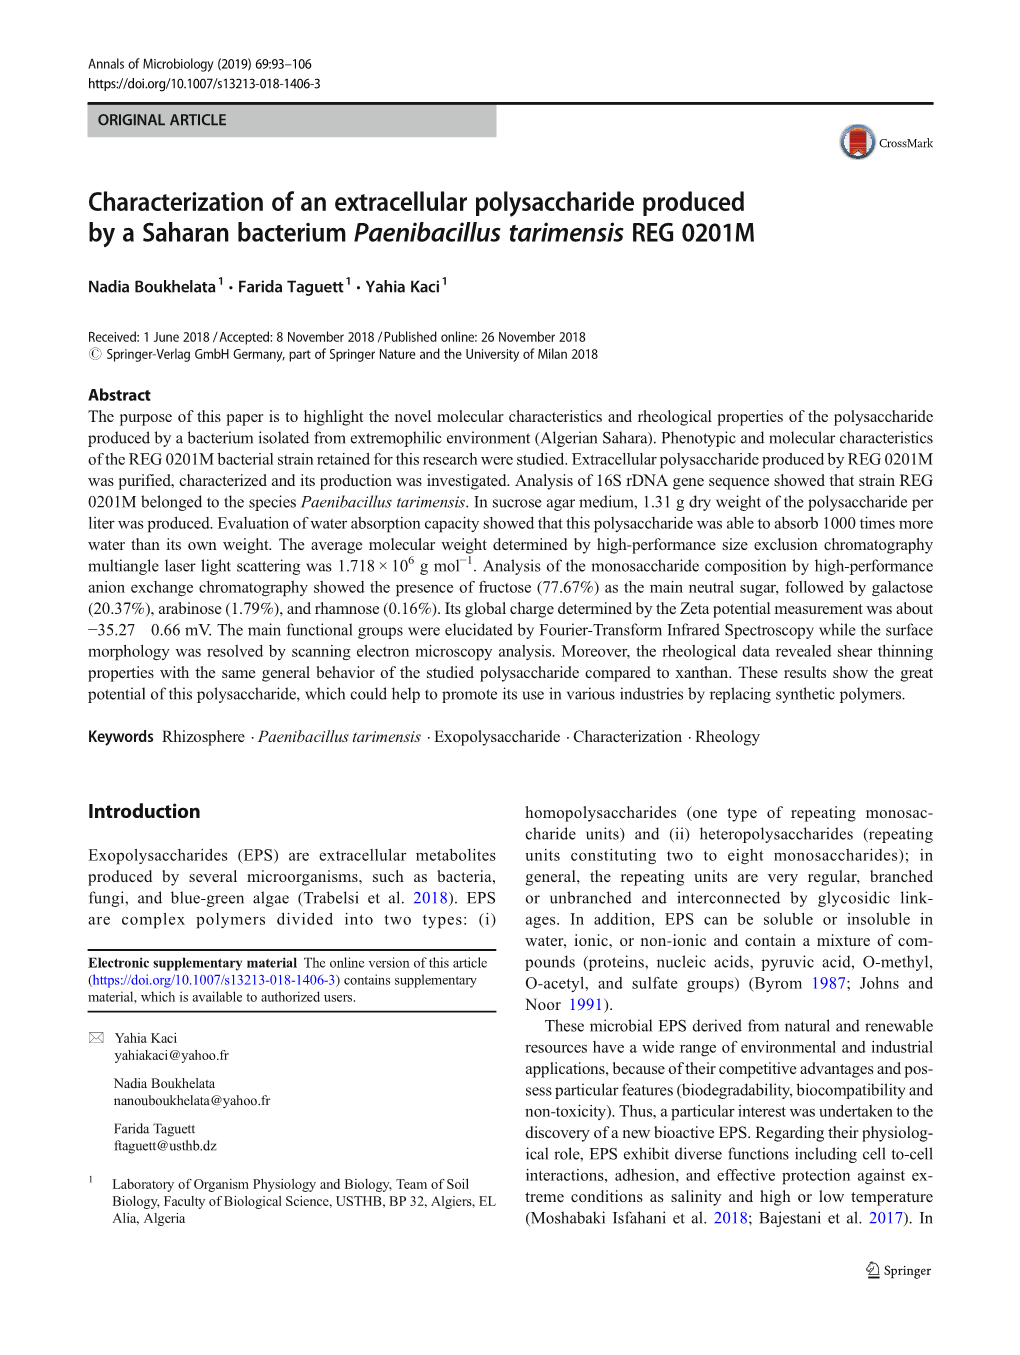 Characterization of an Extracellular Polysaccharide Produced by a Saharan Bacterium Paenibacillus Tarimensis REG 0201M